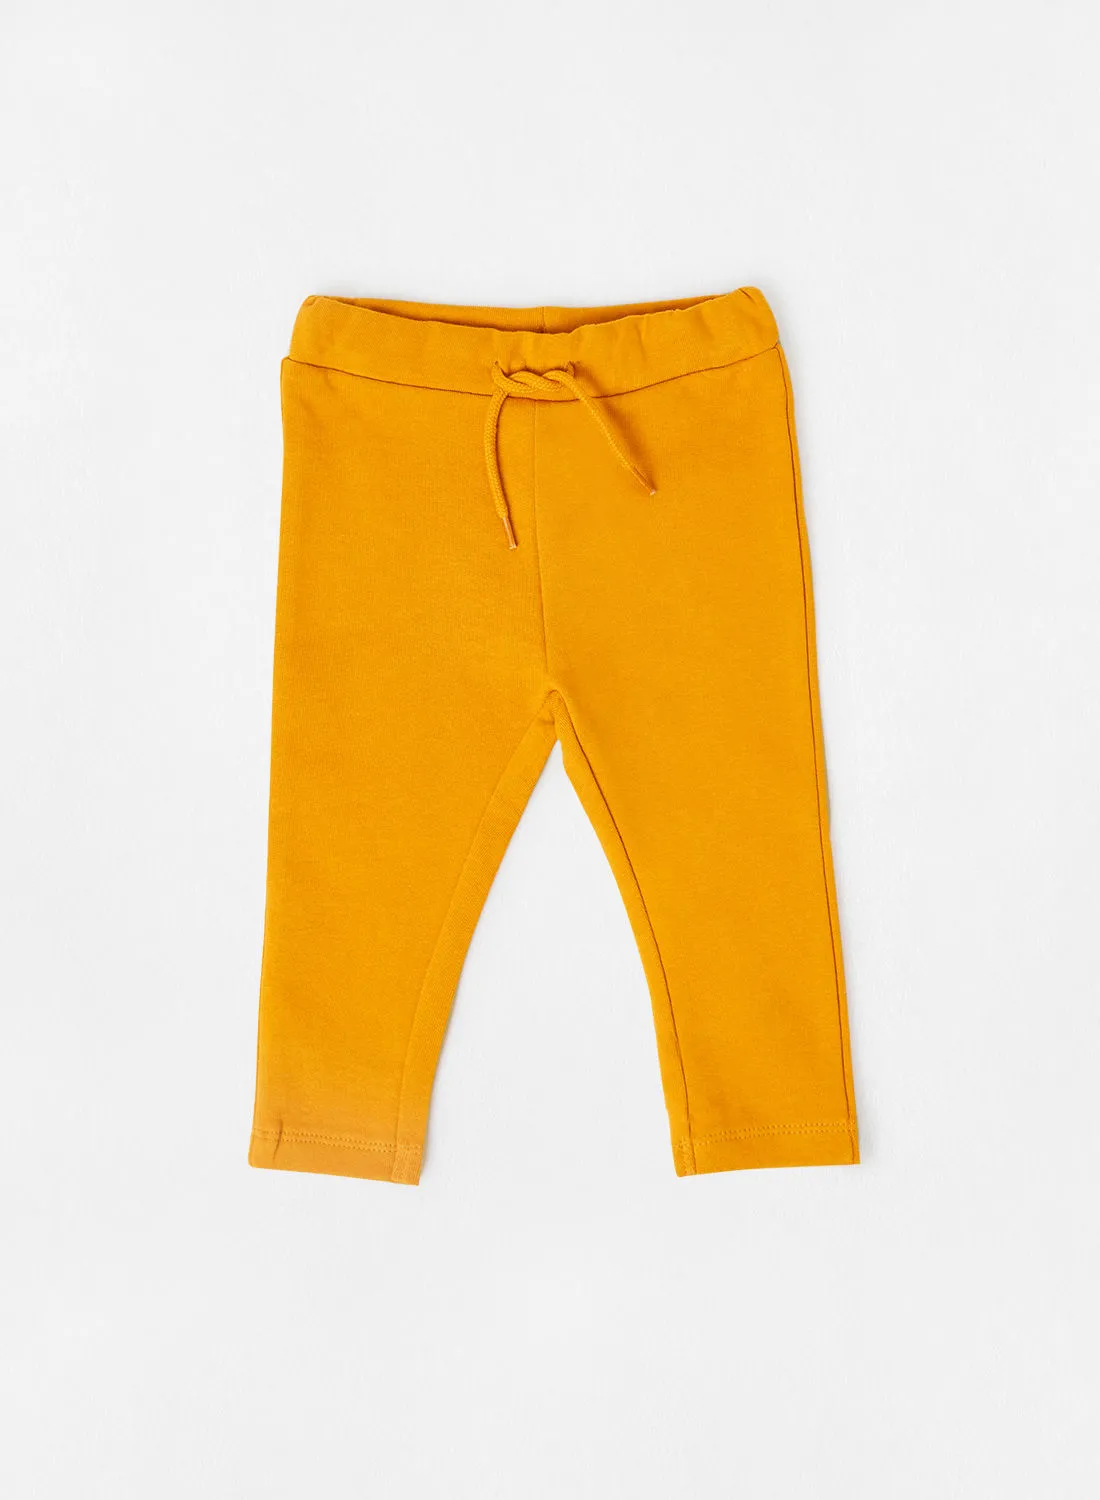 NAME IT Baby/Kids Basic Sweatpants Dark Orange